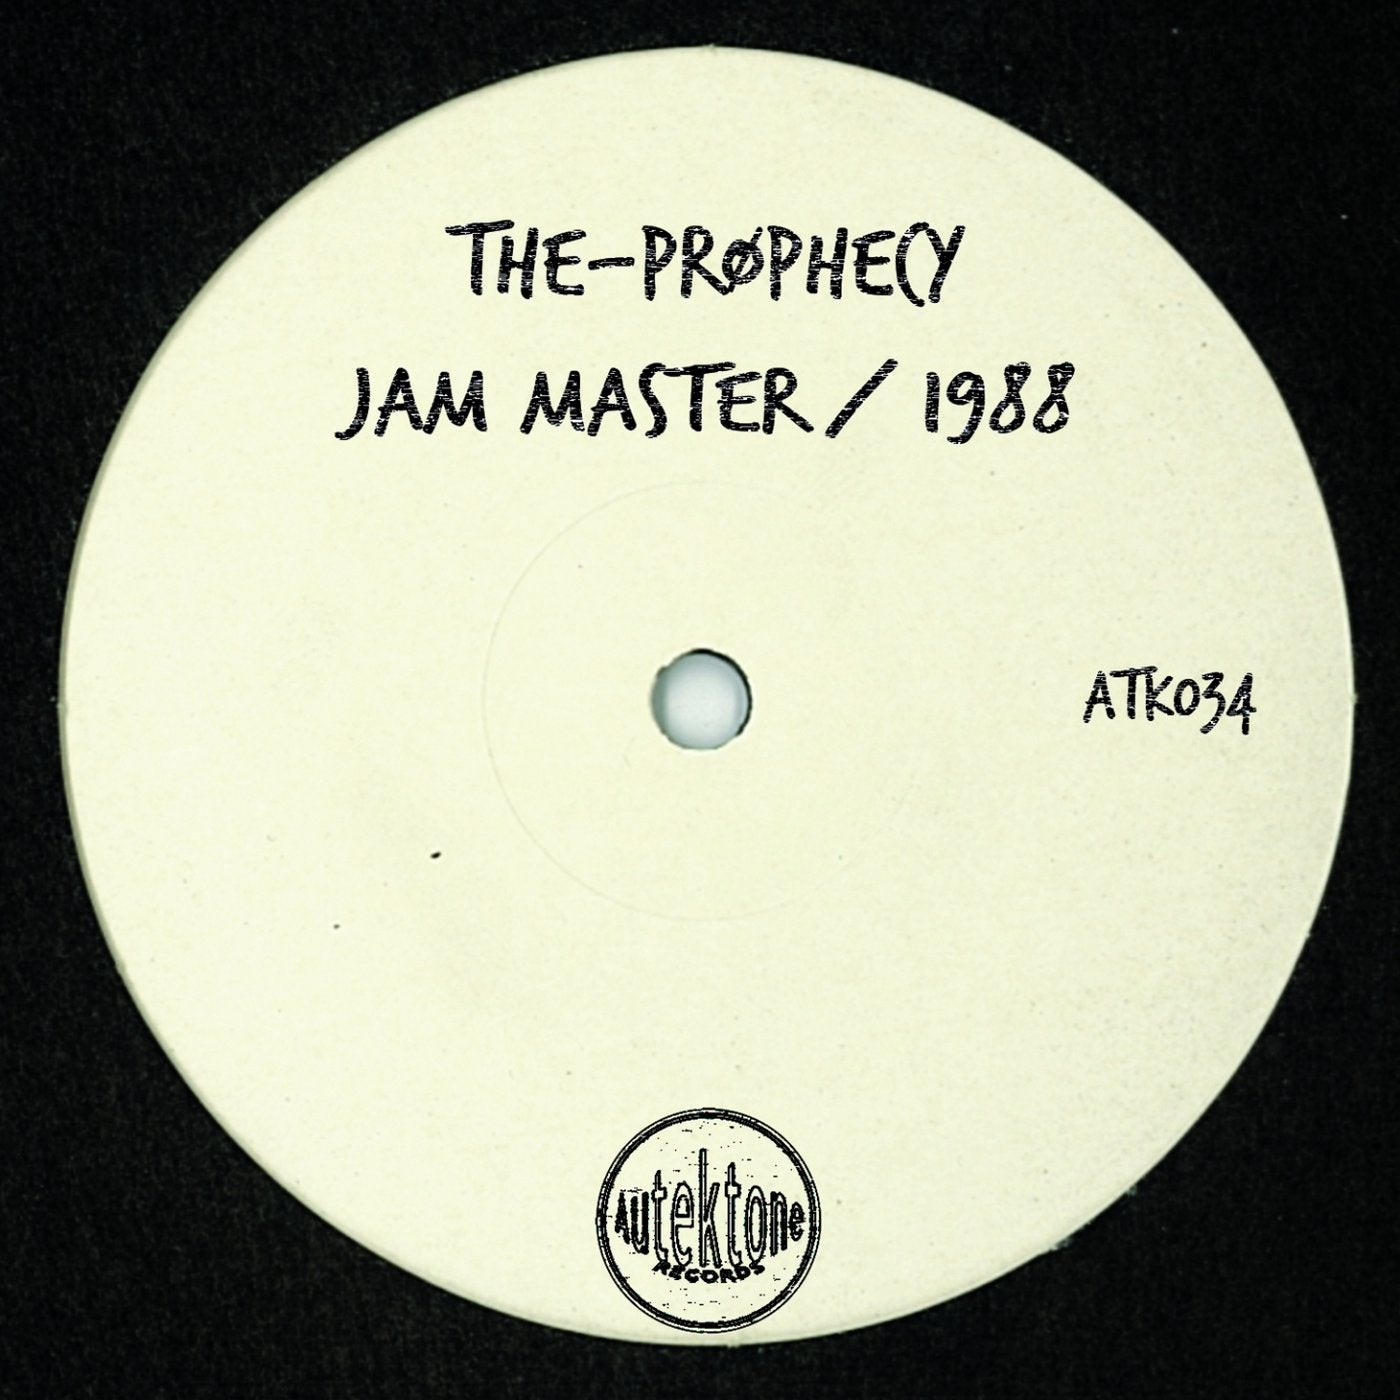 Jam Master / 1988